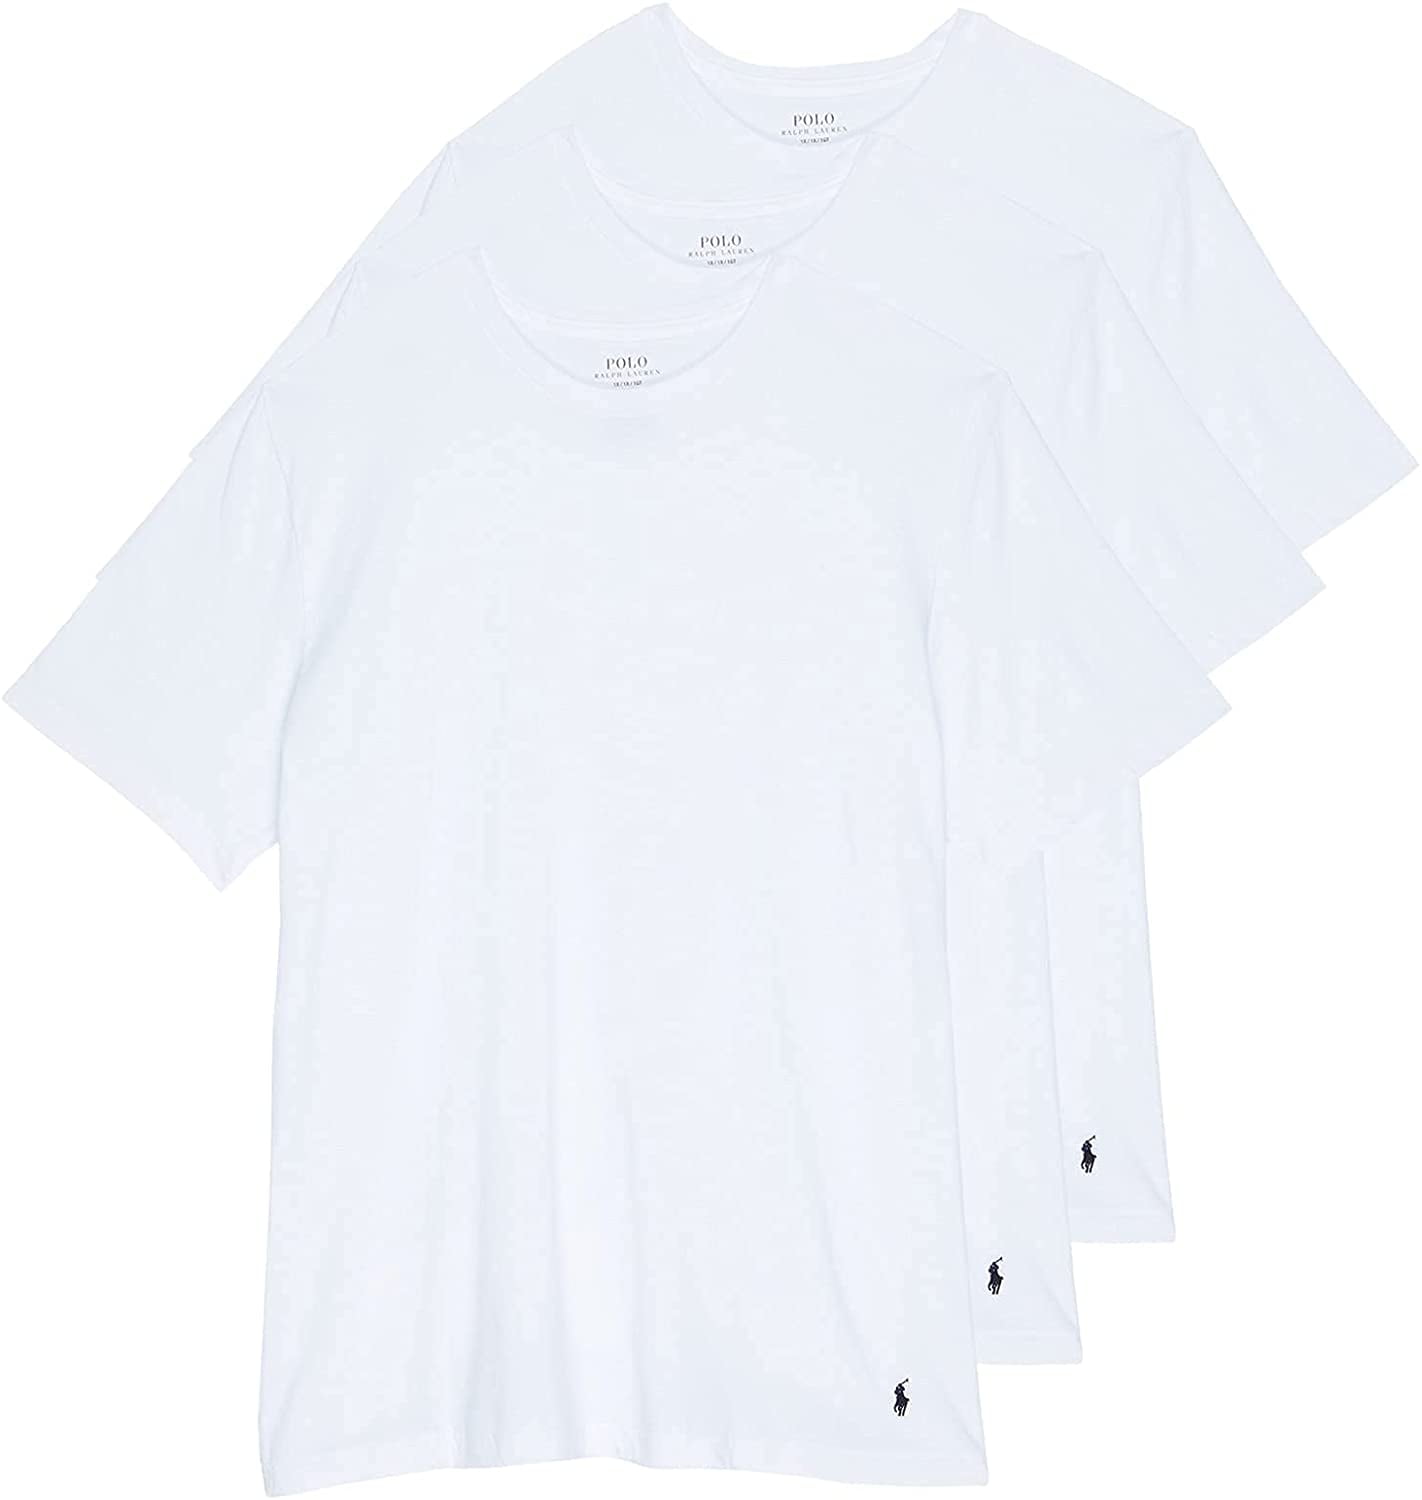 Polo Ralph Lauren 3-Pack Big Crew T-Shirt 4X-Large Big White 